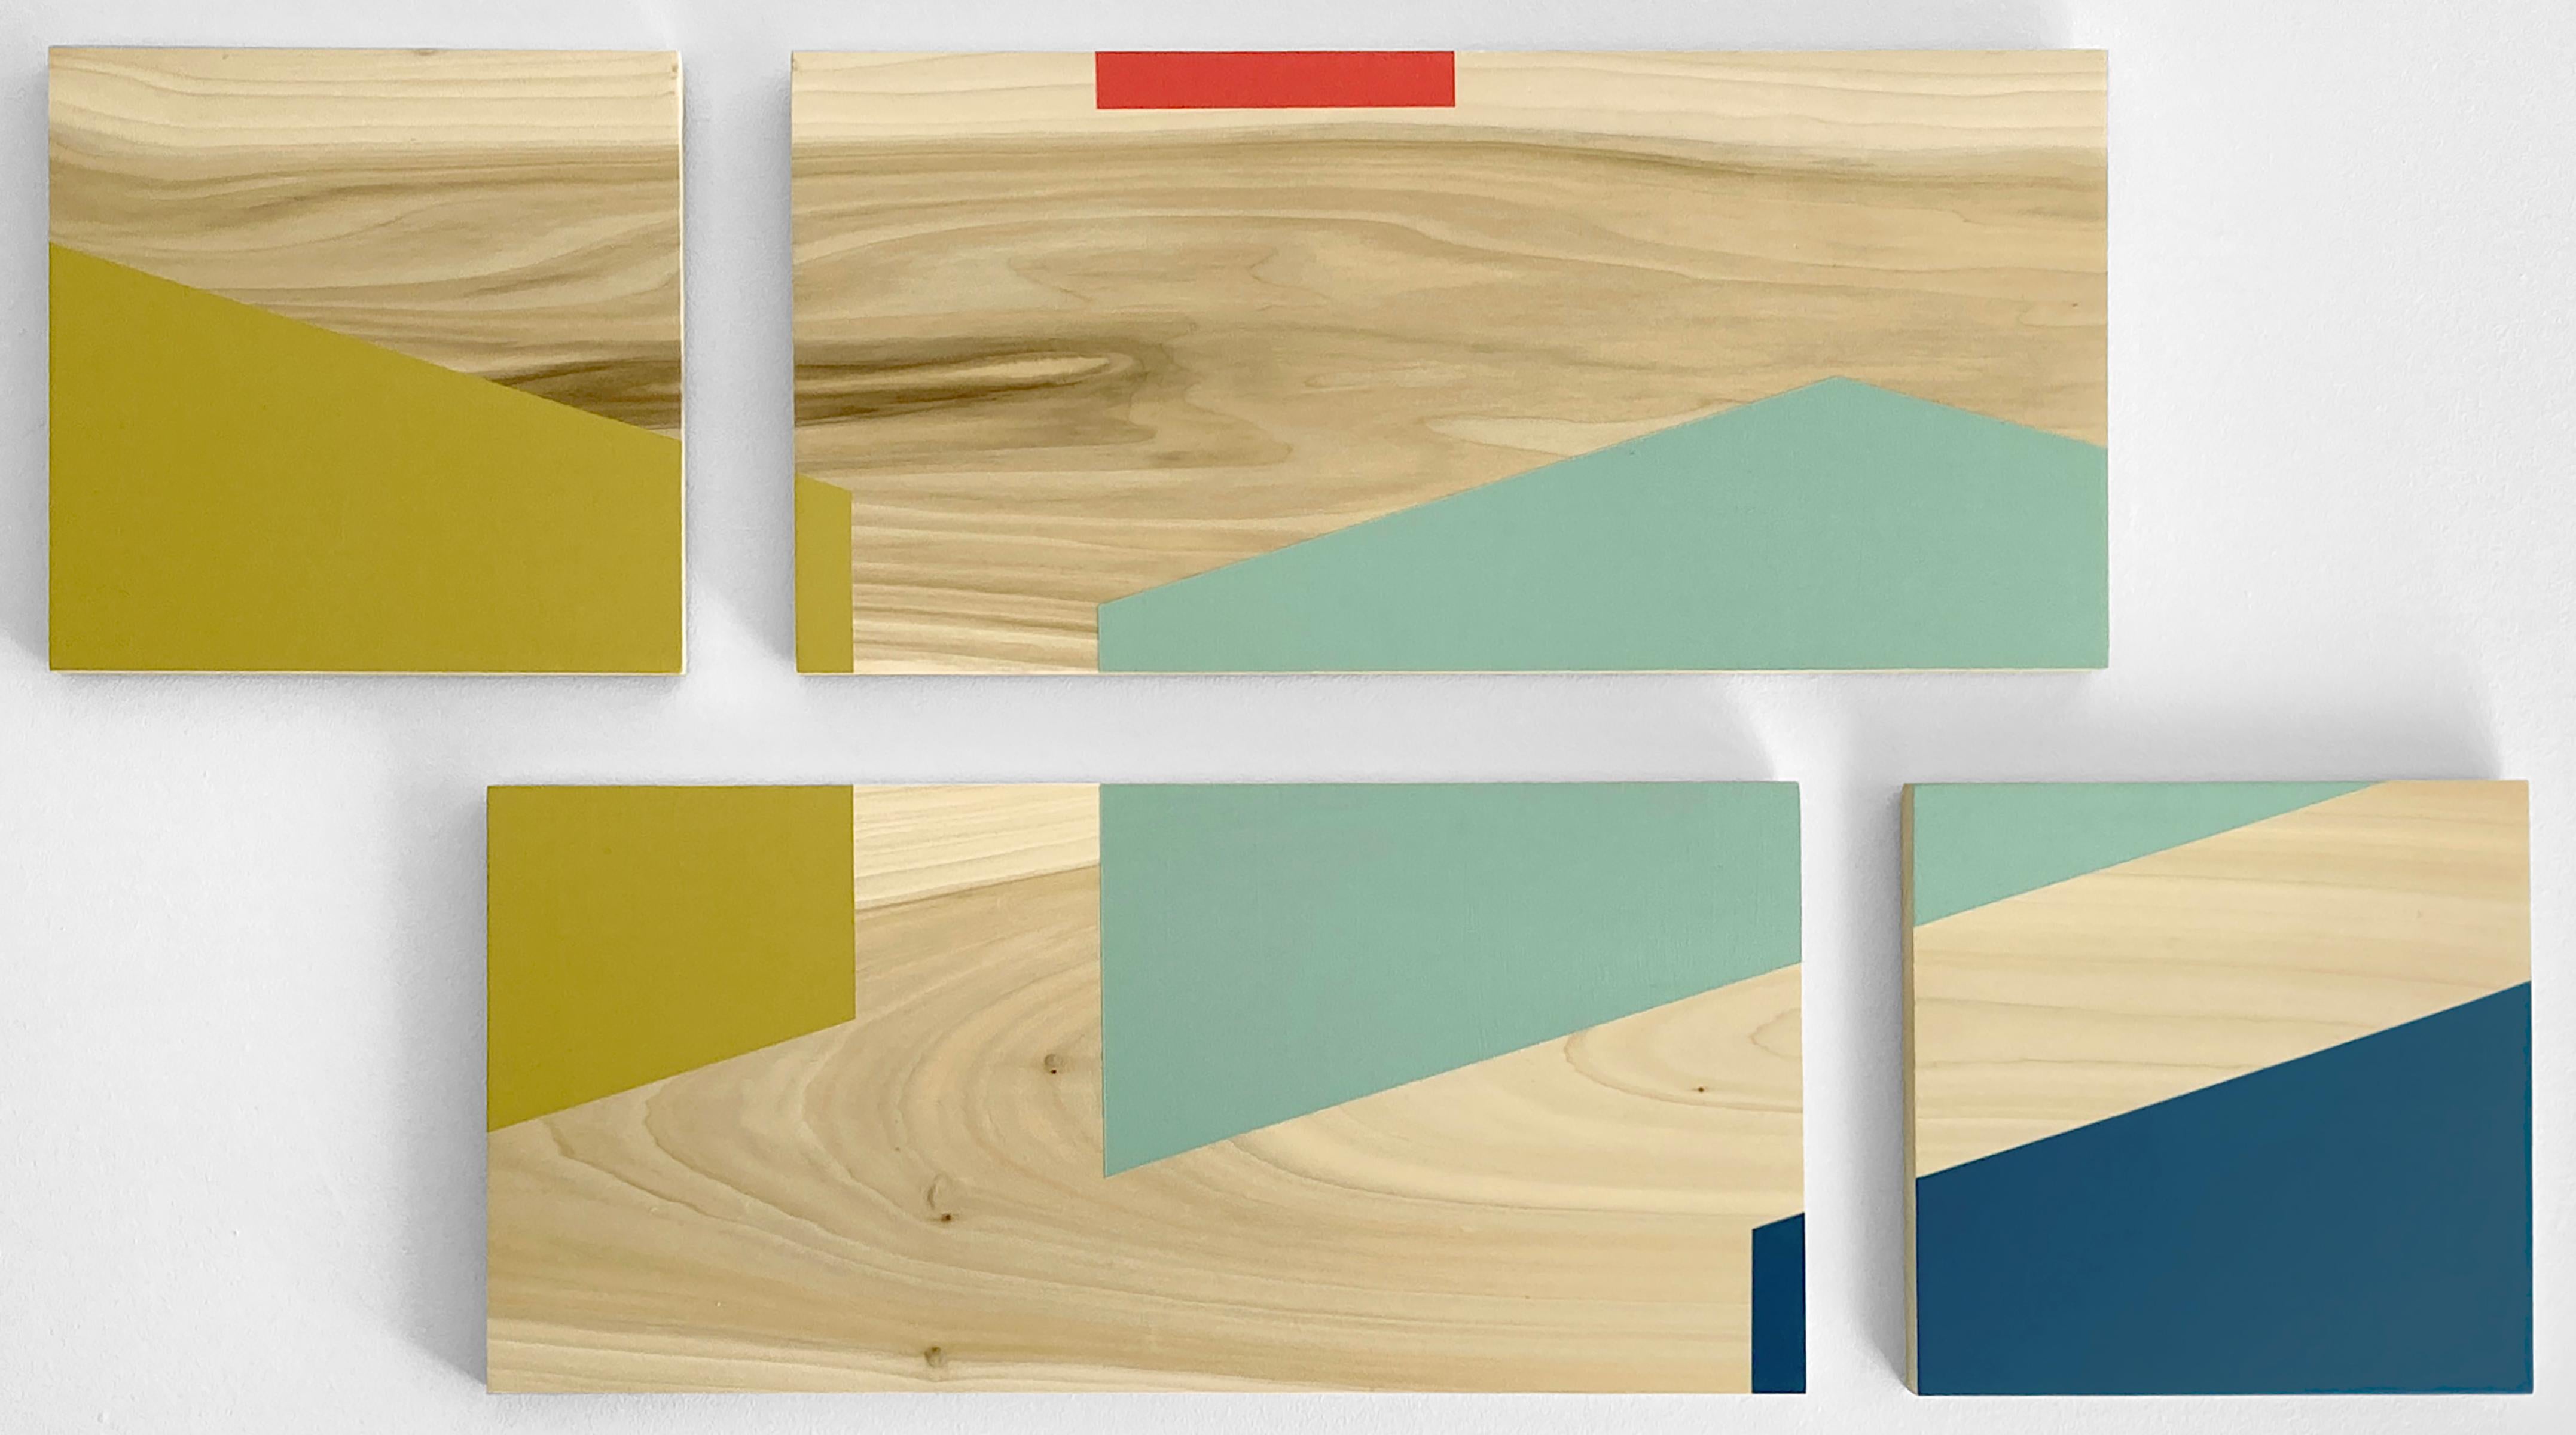 'Orbit' - colorful minimalist work on panel - wood grain - Carmen Herrera